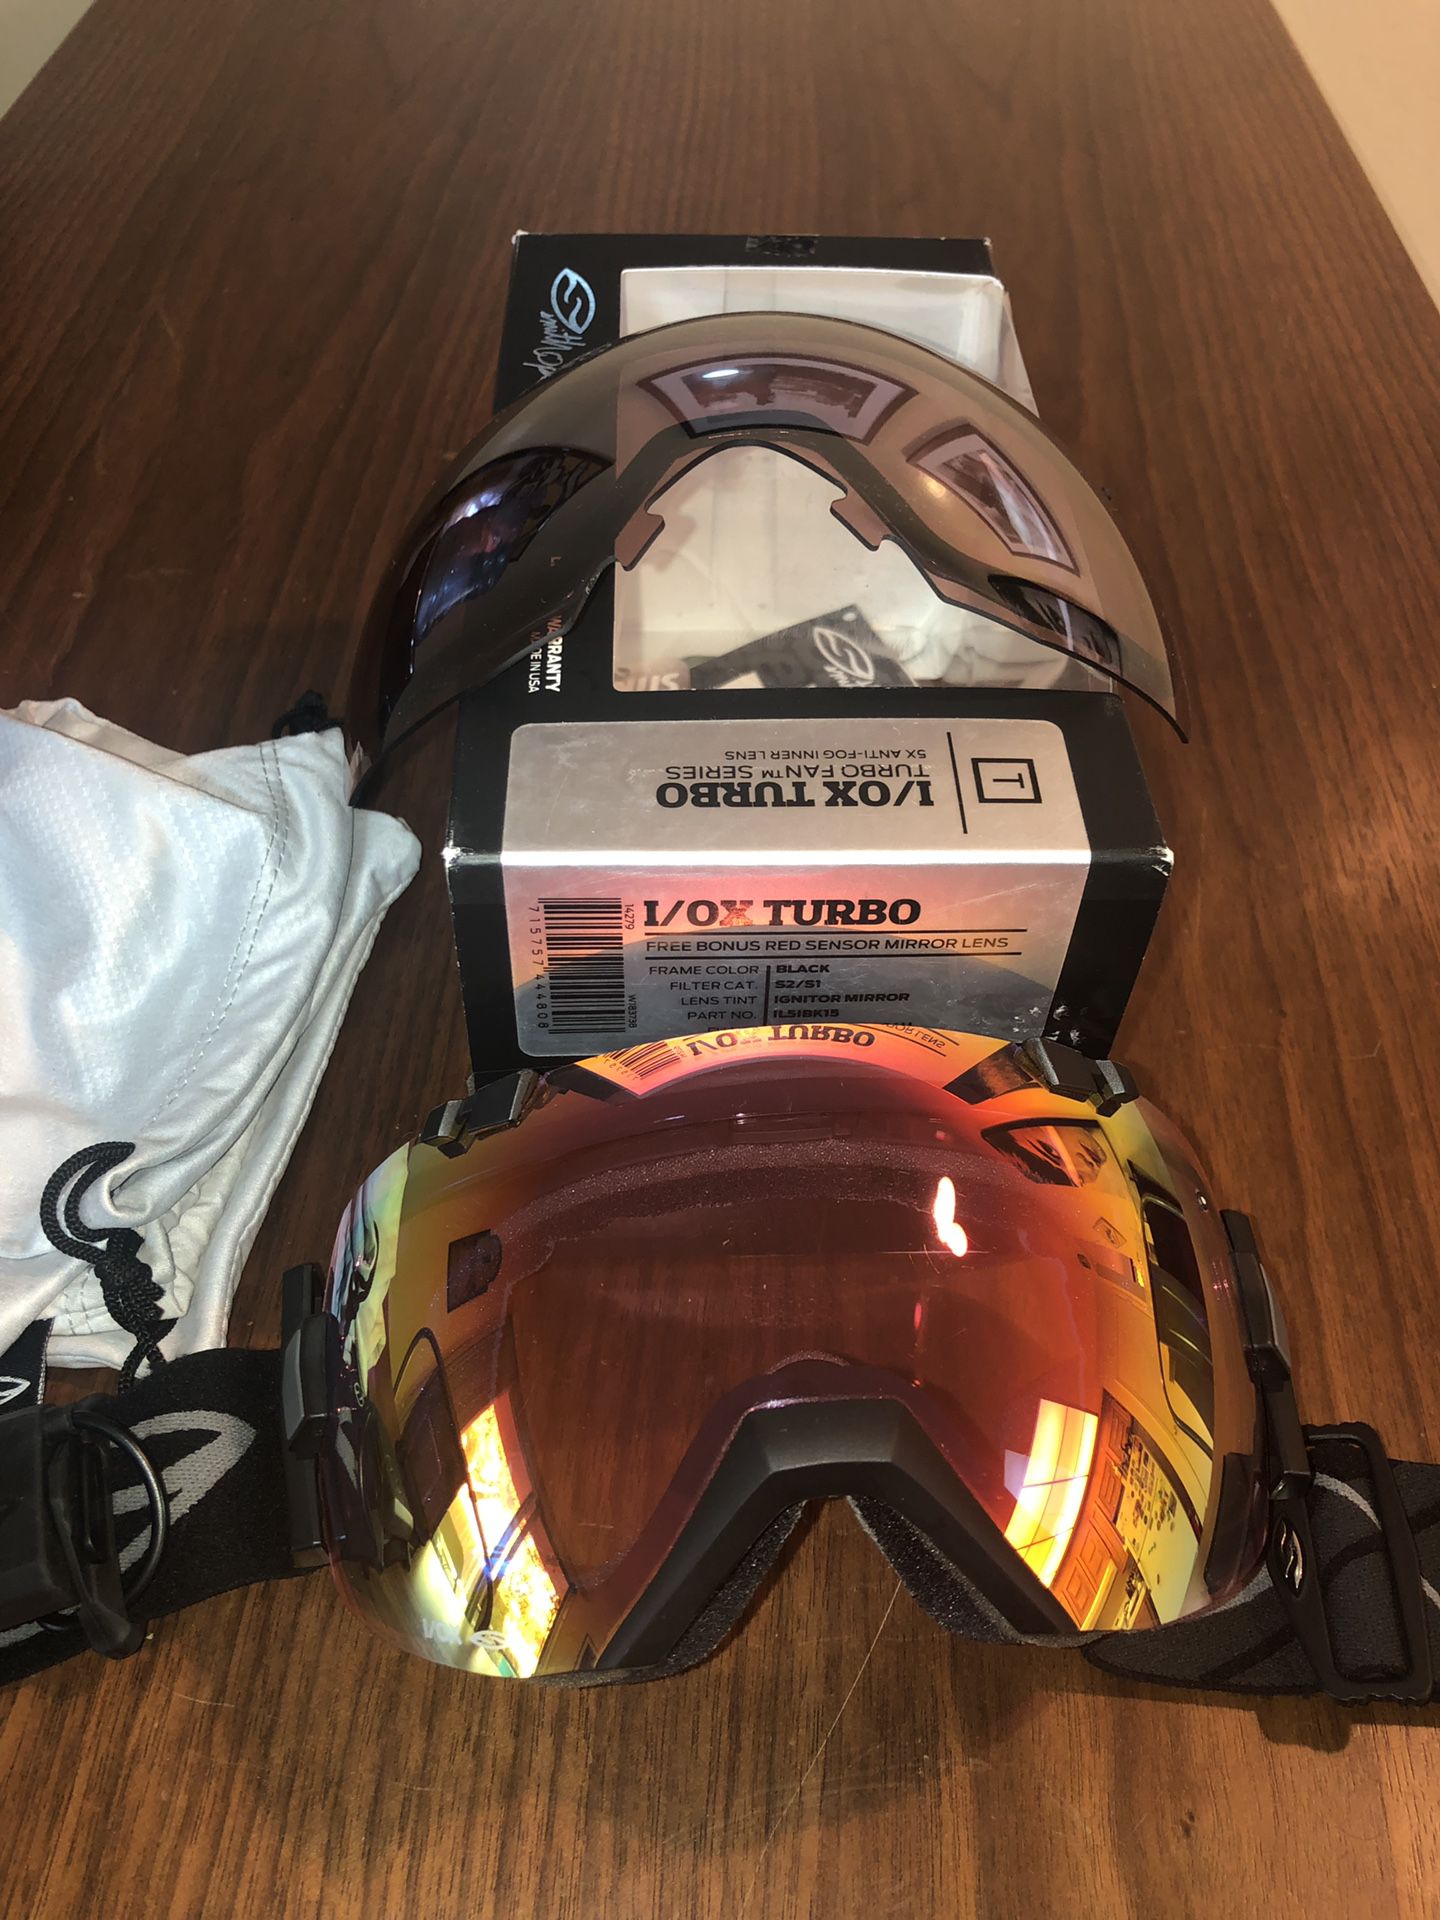 Ski/Snowboard goggles. Smith I/OX Turbo was lenses